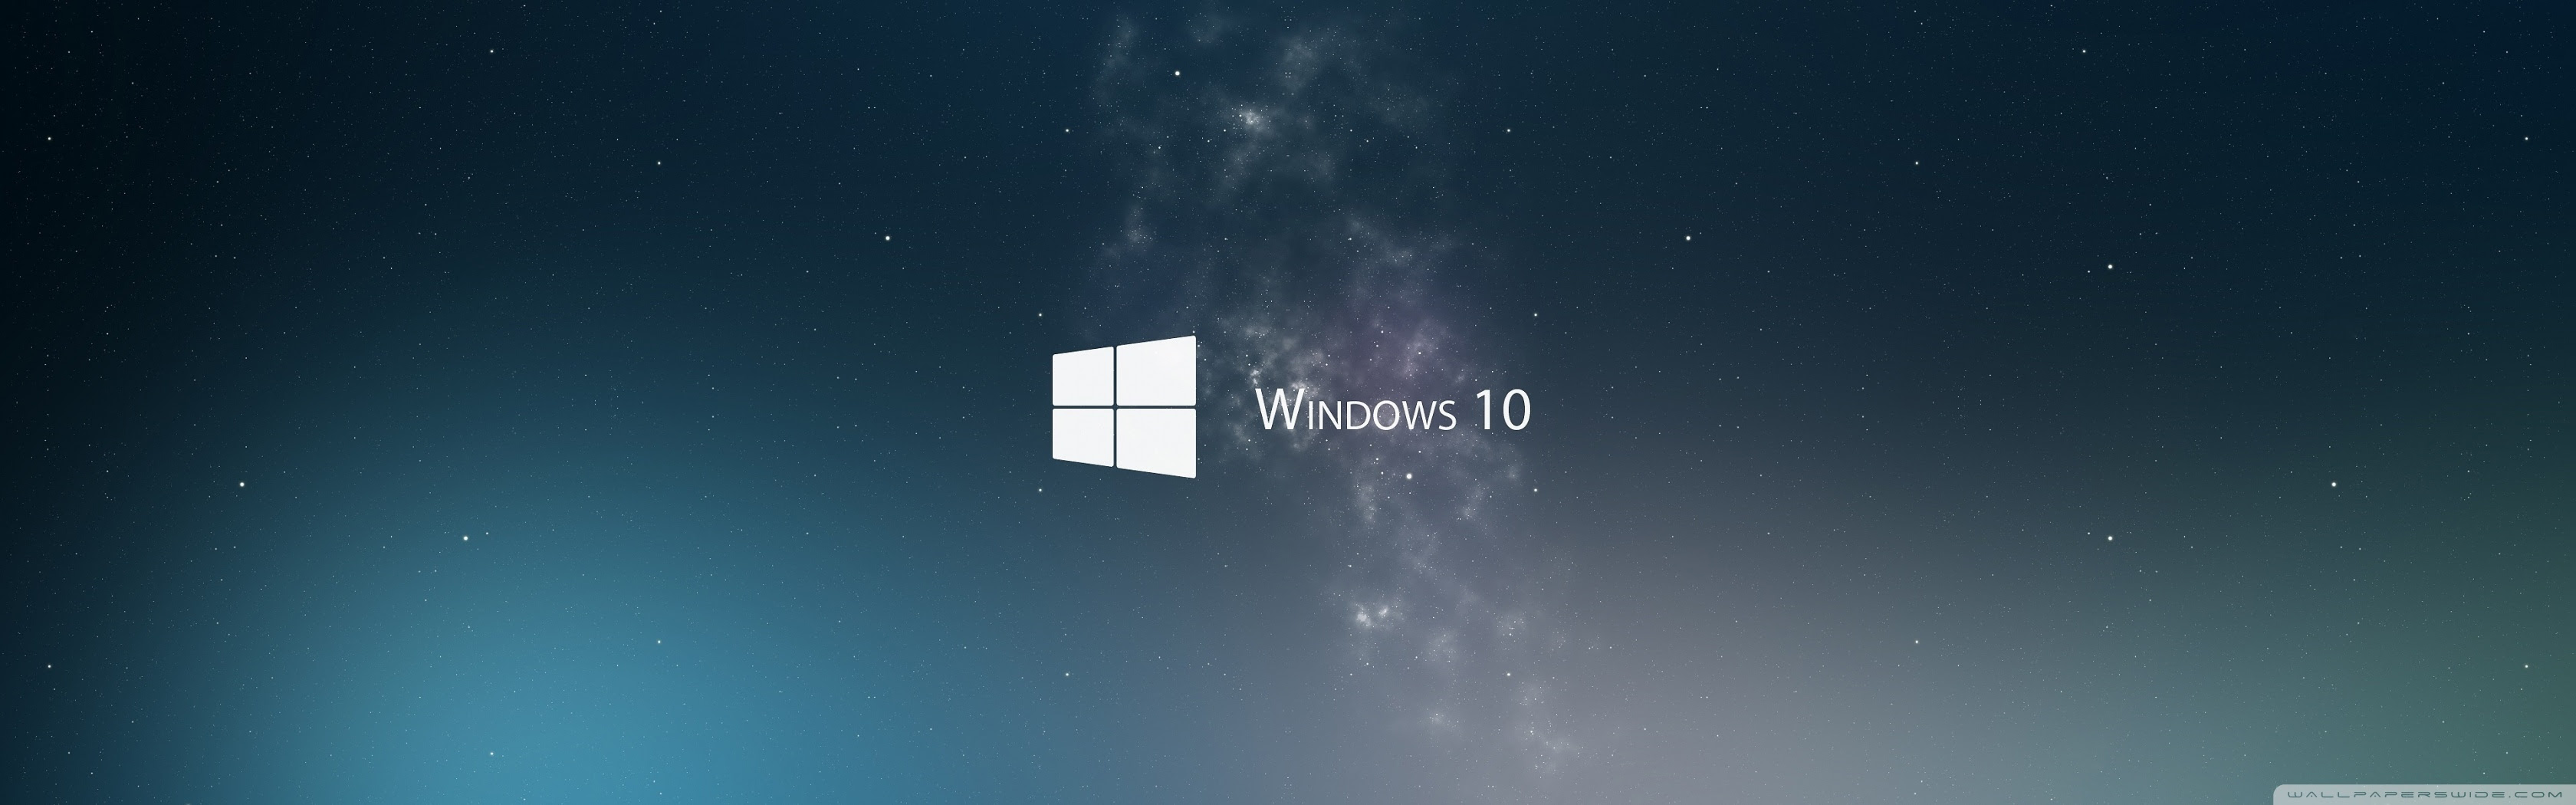 Windows Desktop Backgrounds: Windows